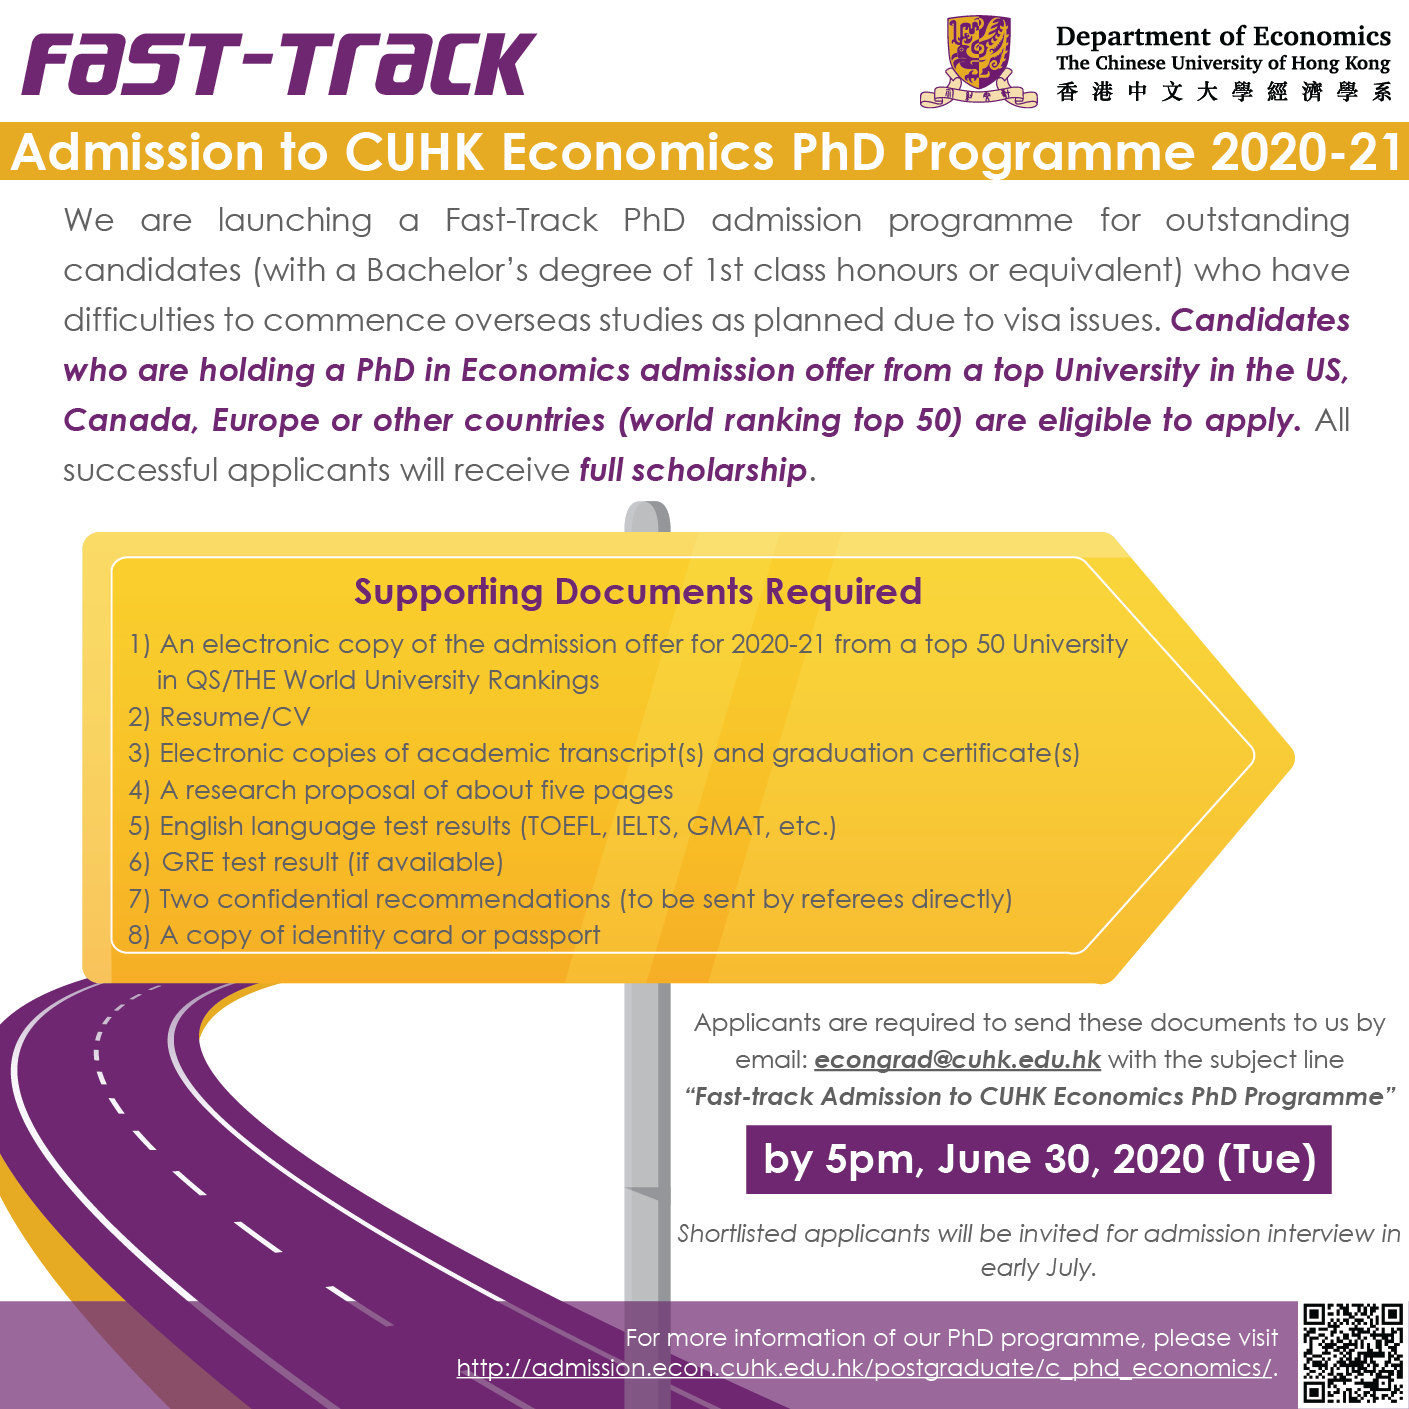 IG Fast track PhD admission 2020 21 02